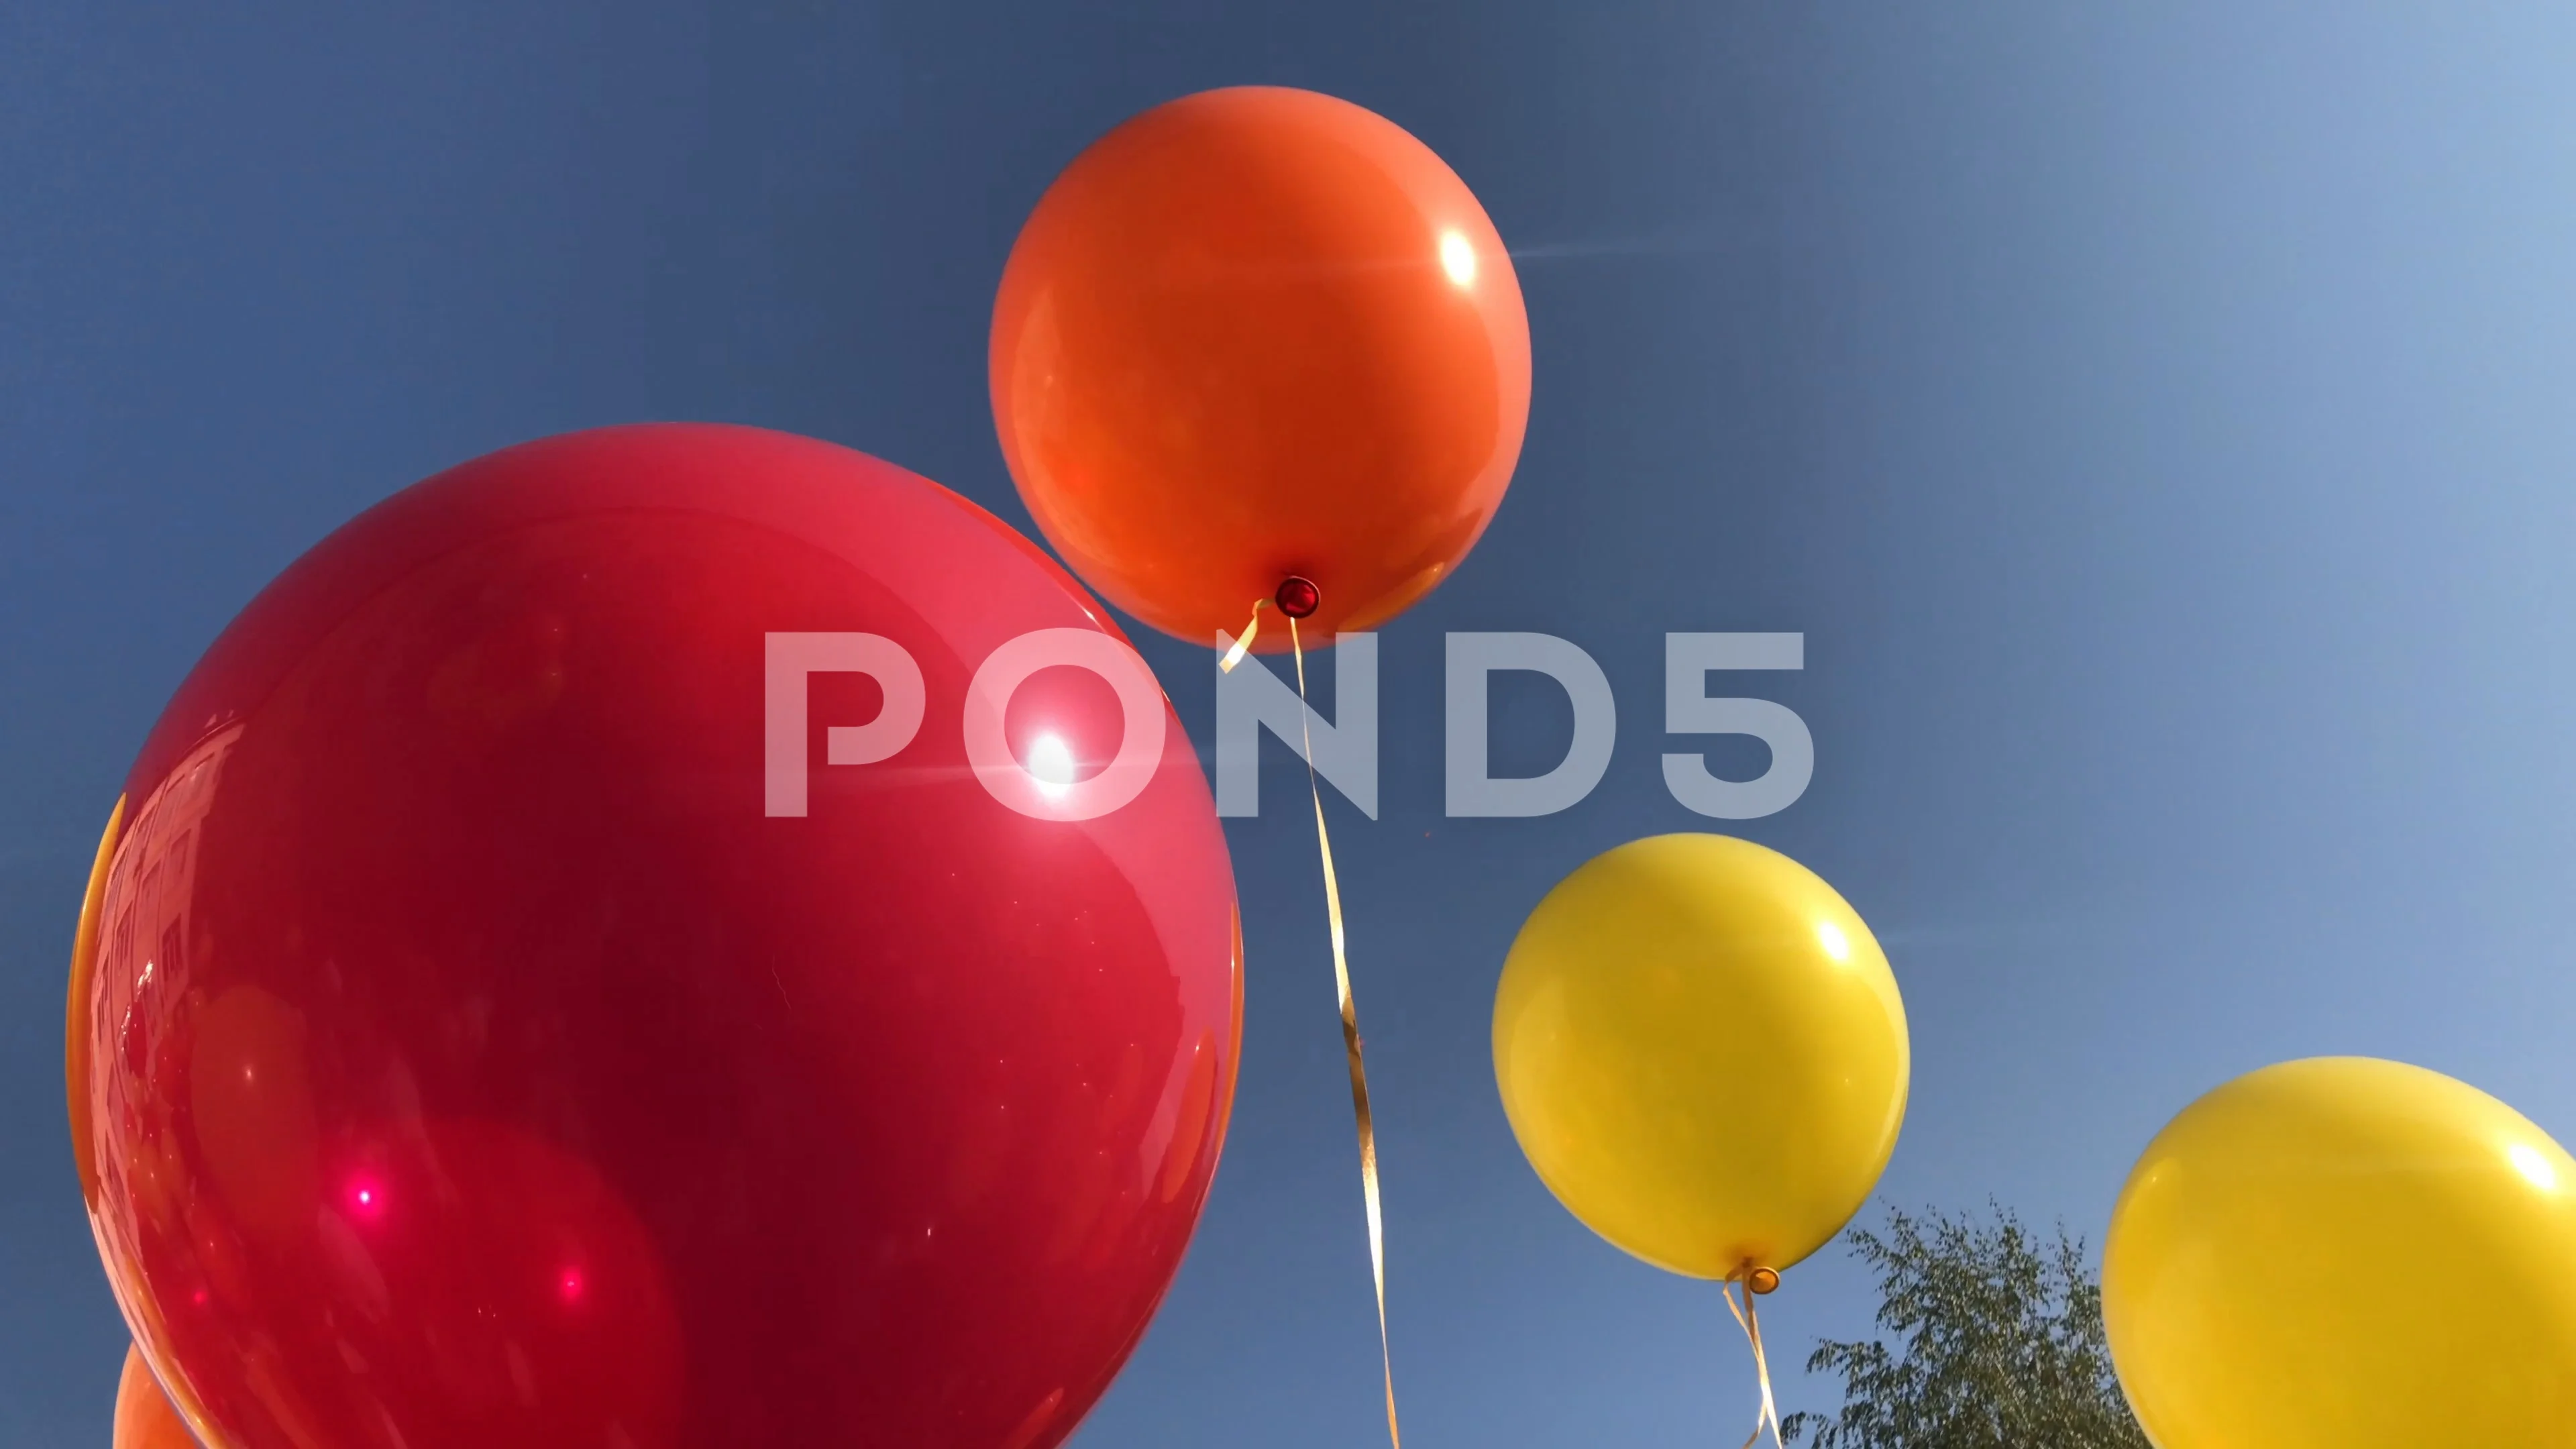 https://images.pond5.com/red-yellow-balloon-tied-string-106058197_prevstill.jpeg